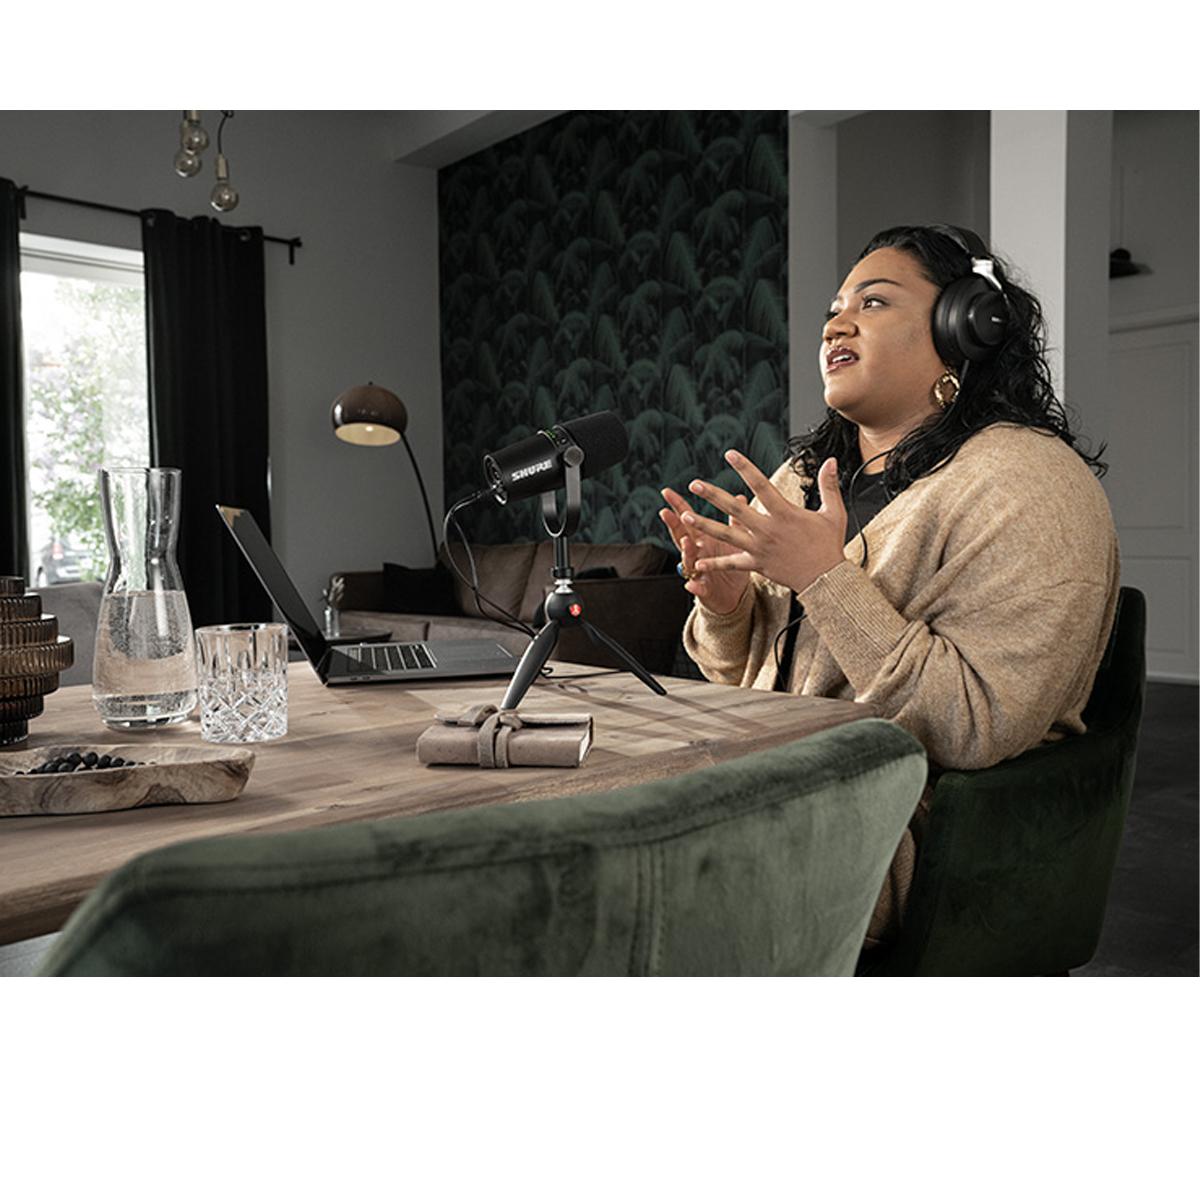 Shure MV7 Podcast Kit Set de micrófono para Podcast y soporte de sobremesa.